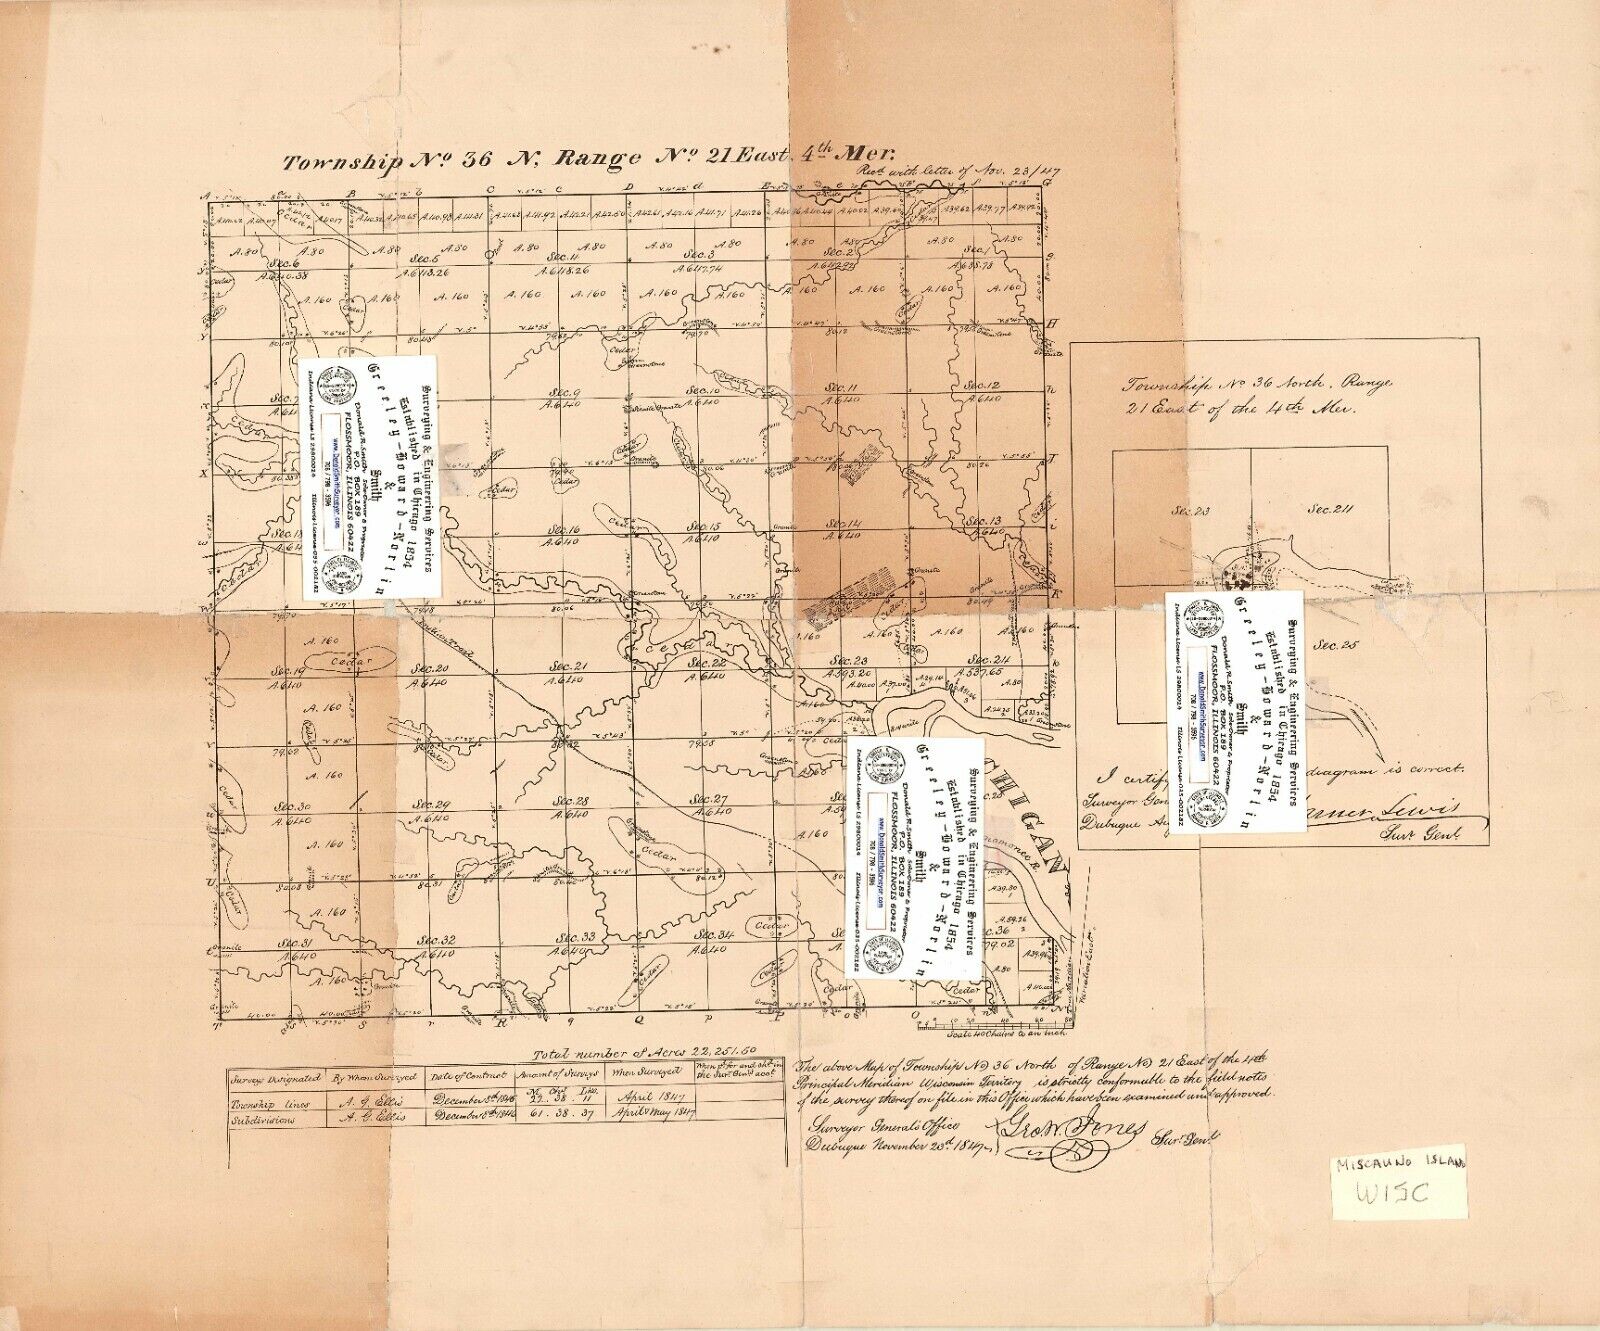 Wisconsin Antique Map: Miscauno Island Resort on Menominee River + documents Без бренда - фотография #7